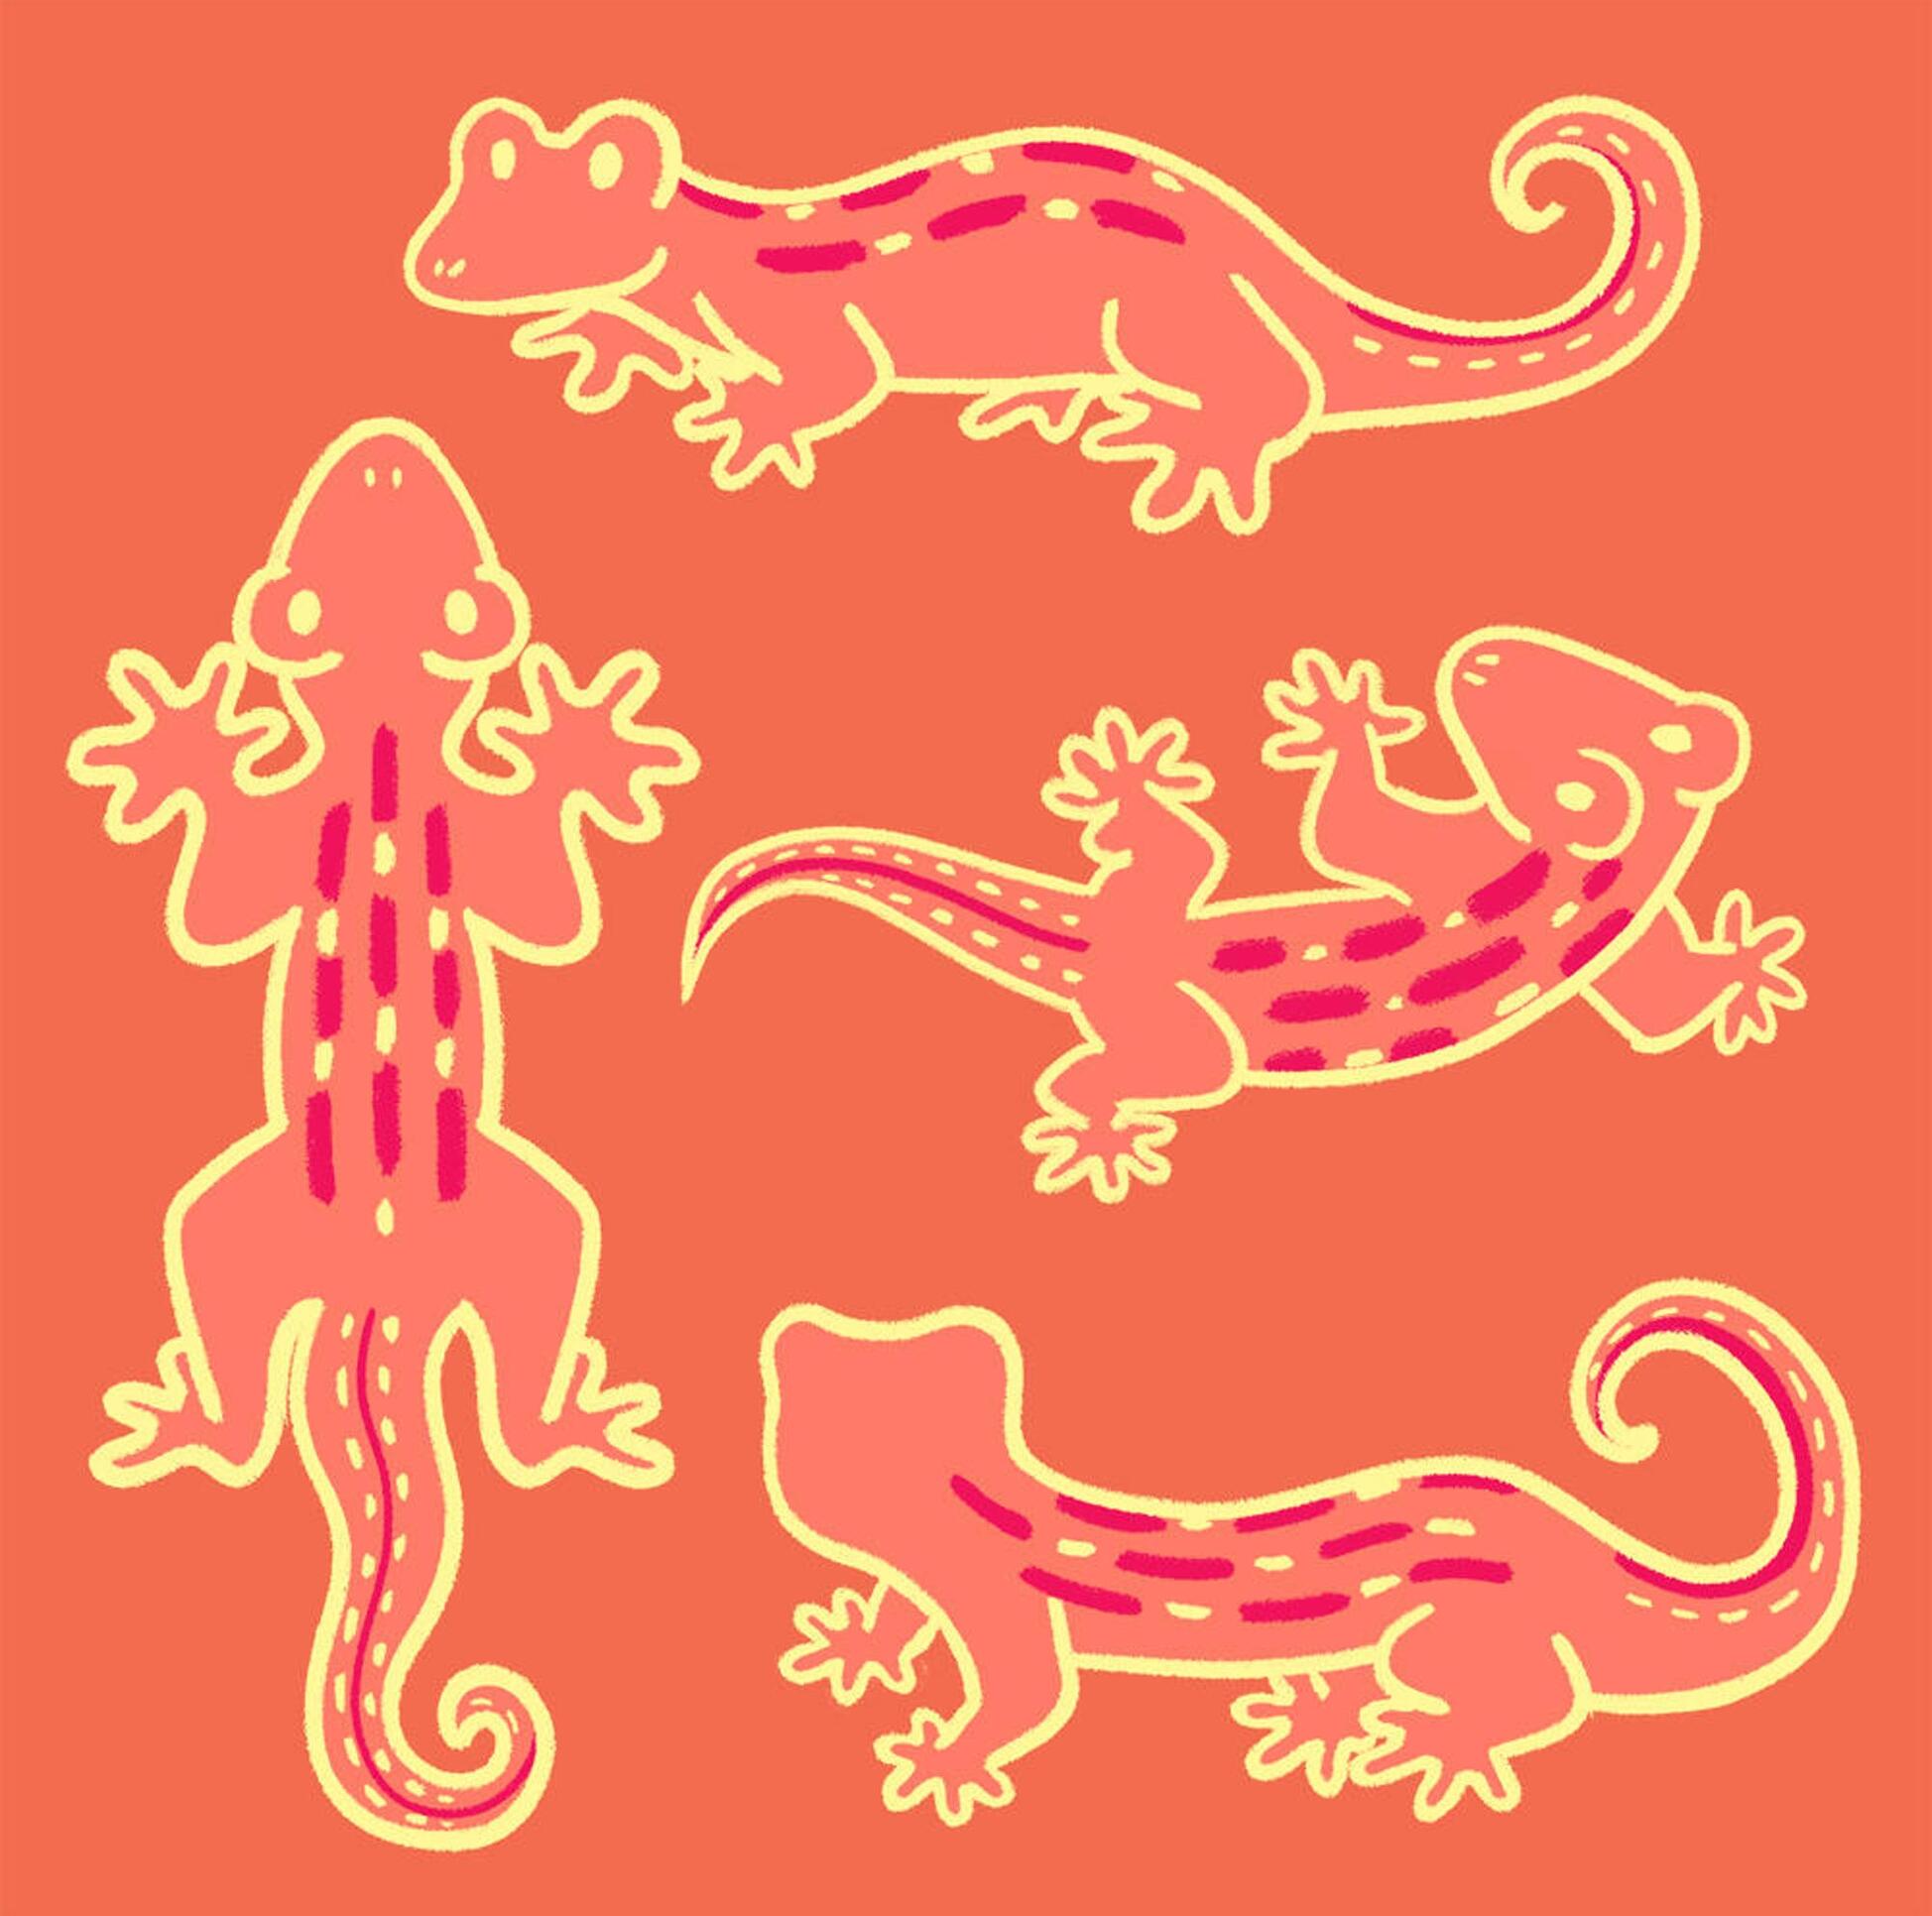 Illustrations of Geckos